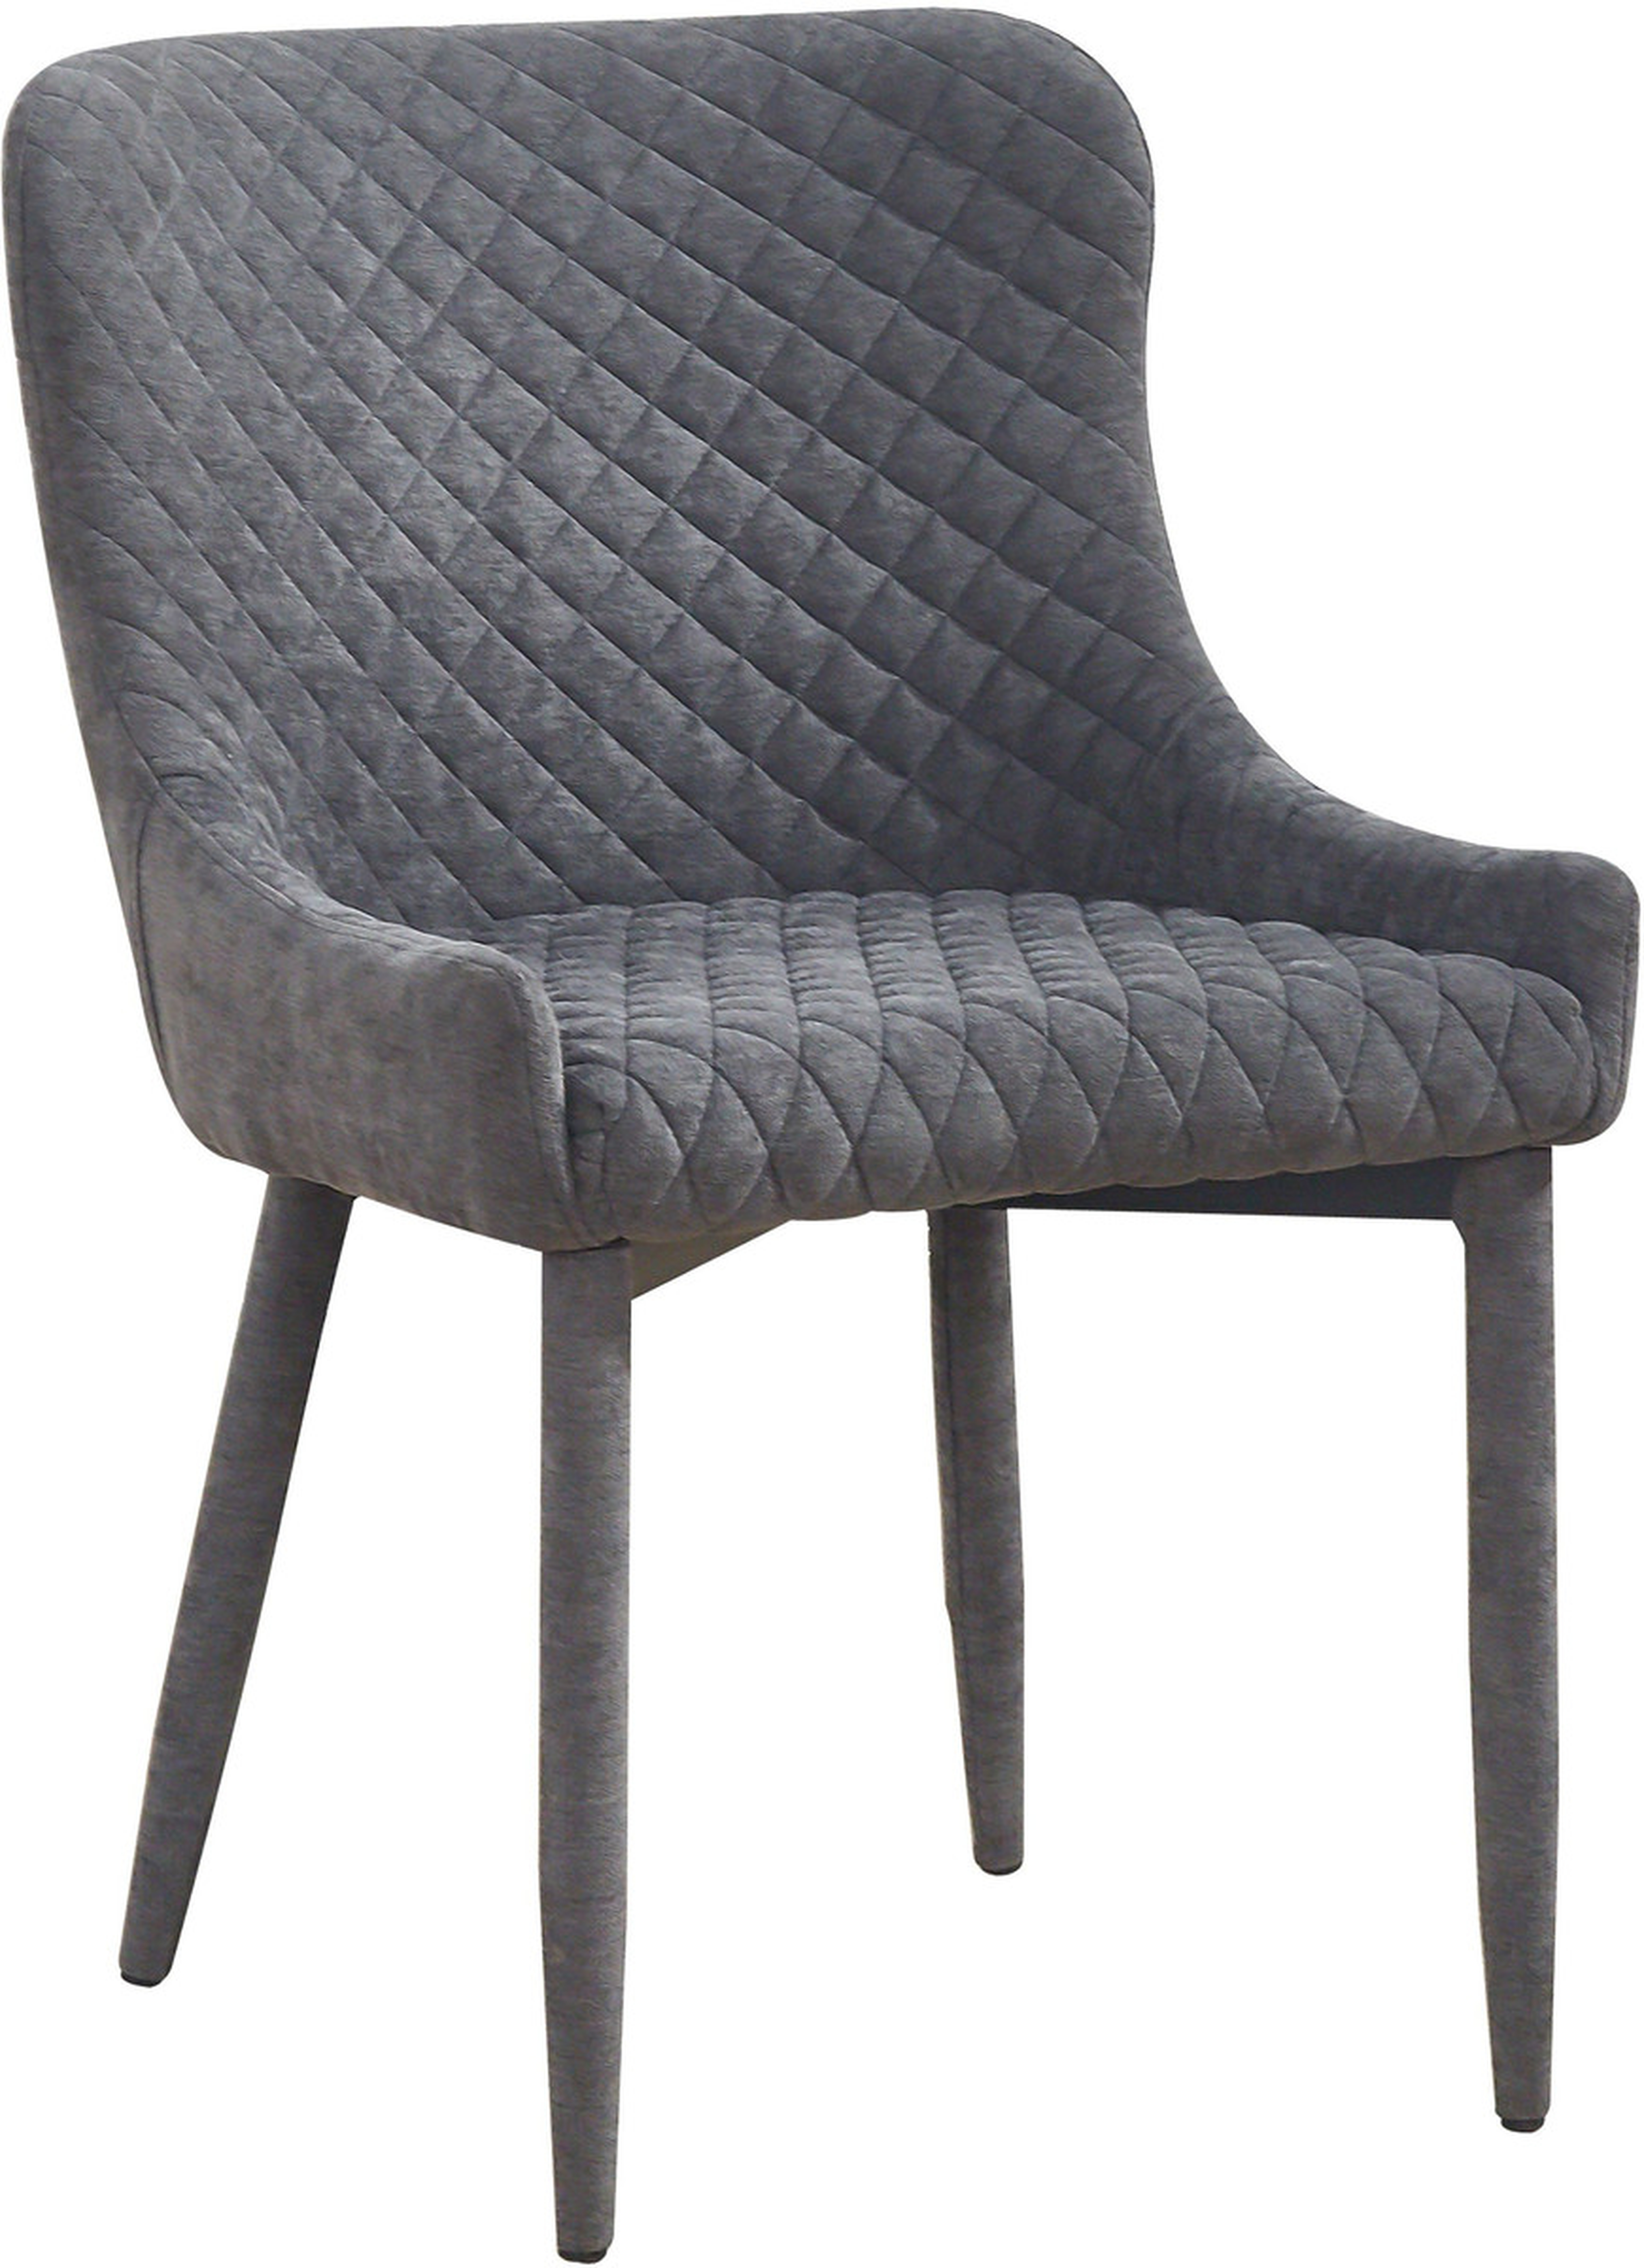 Draco Grey Chair - Maren Home